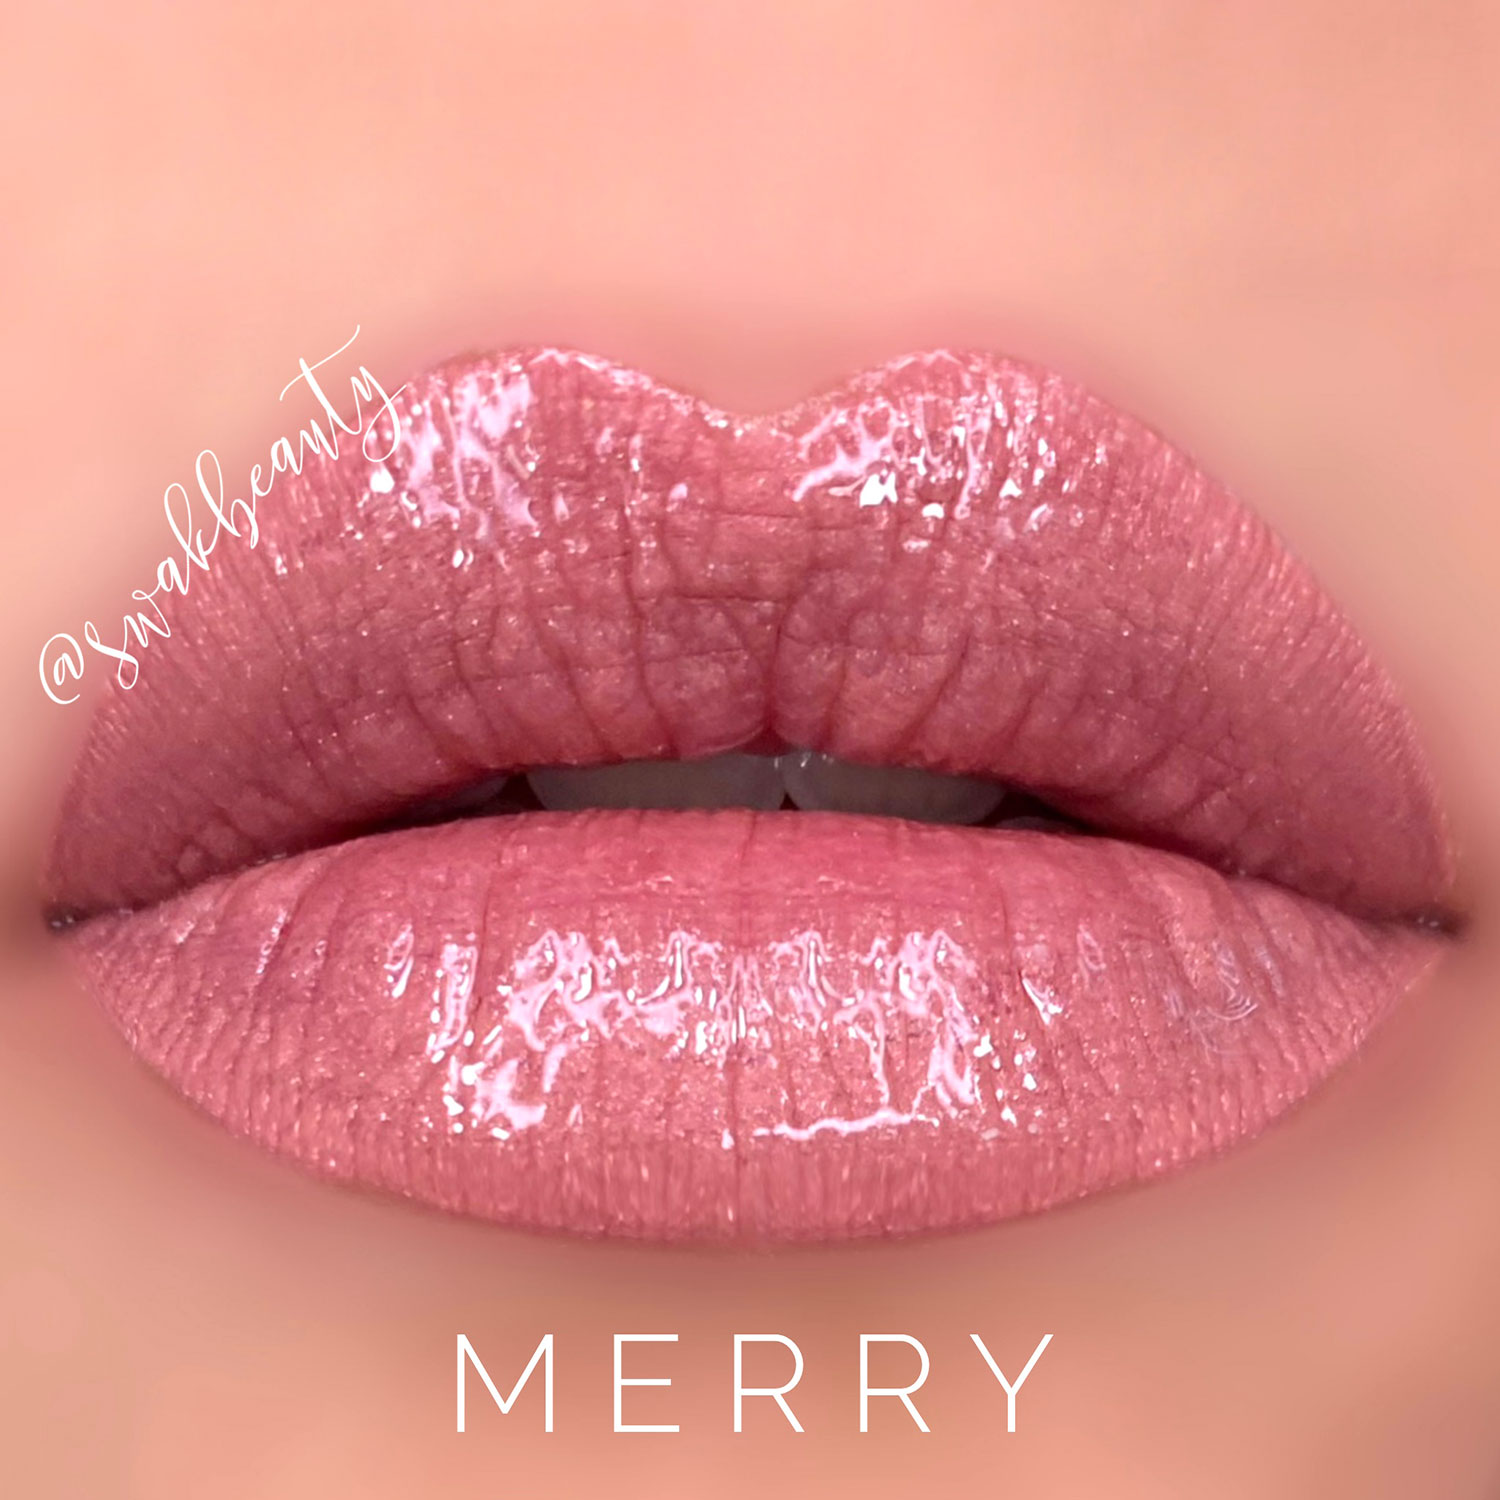 Merry-lips